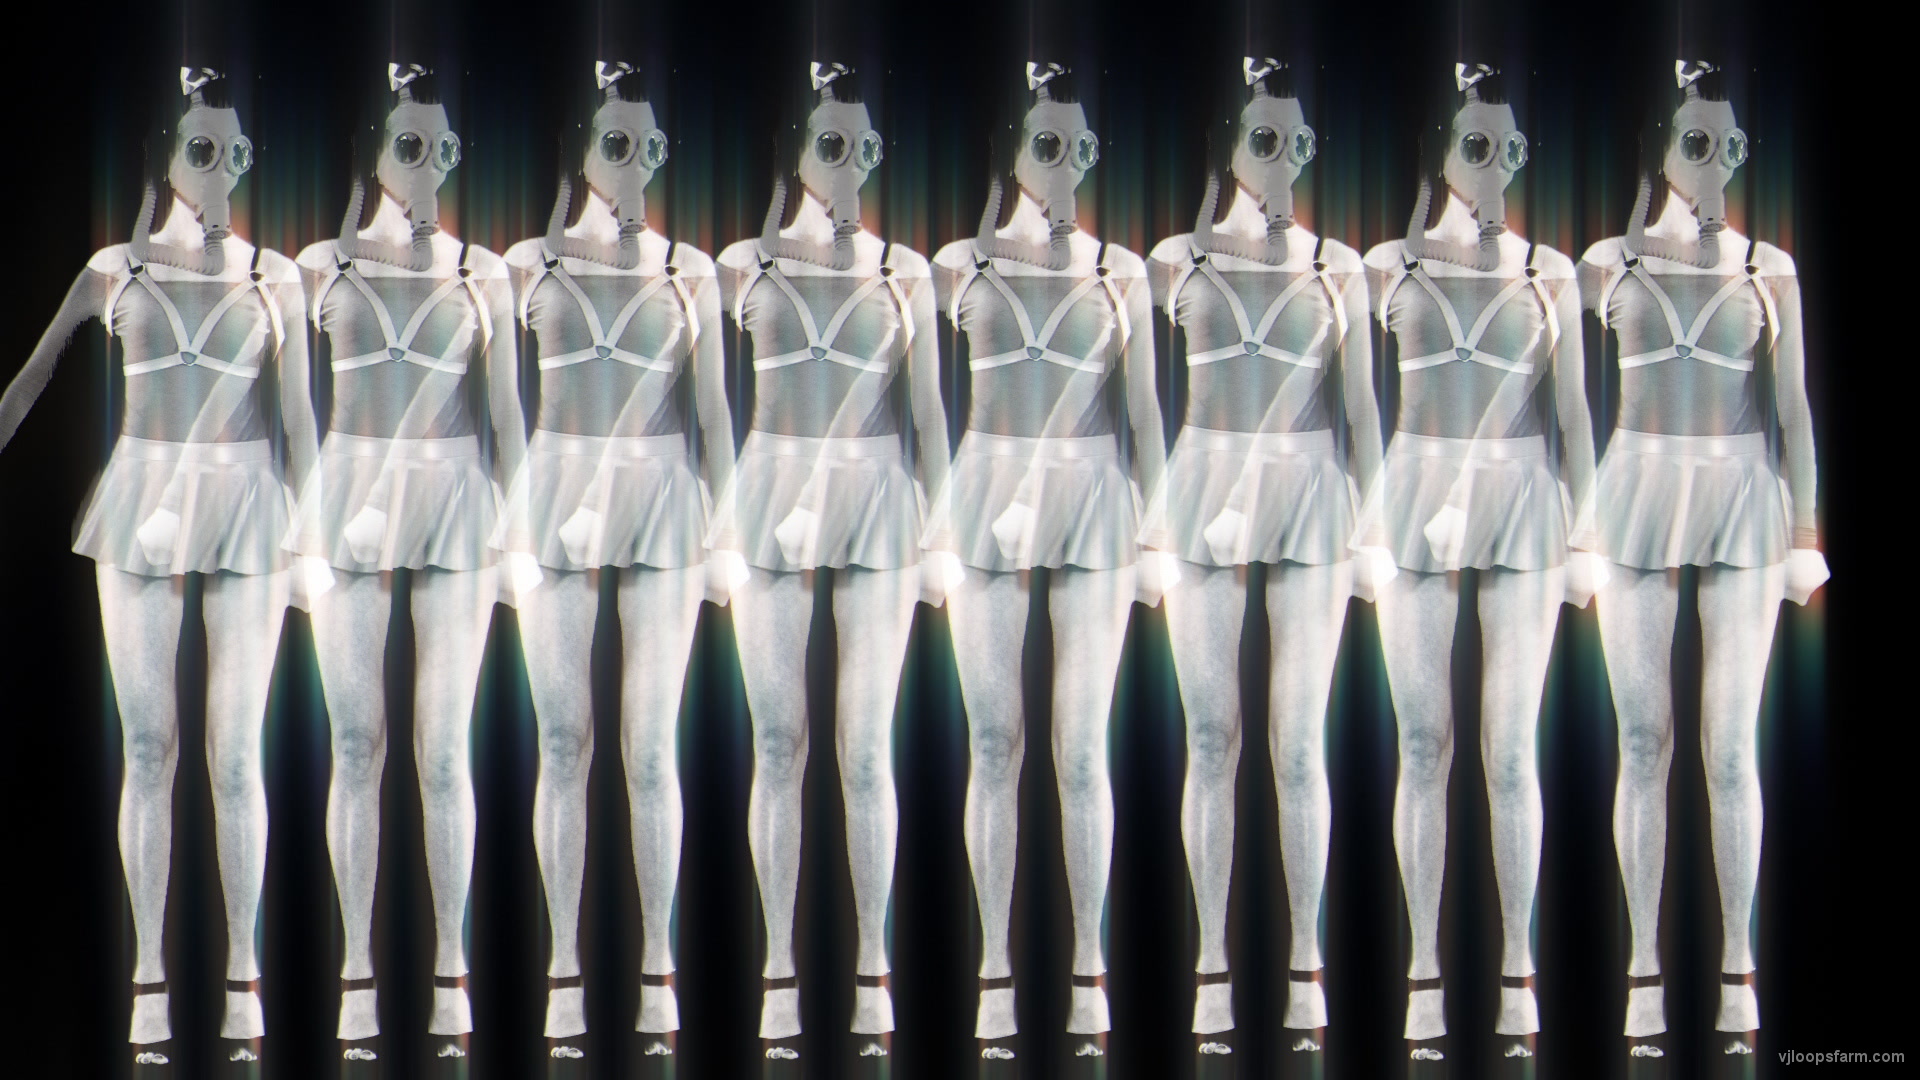 Black White Girls Video Texture Pattern in Gas Mask marshing with glowing effect stock footage video art vj loop